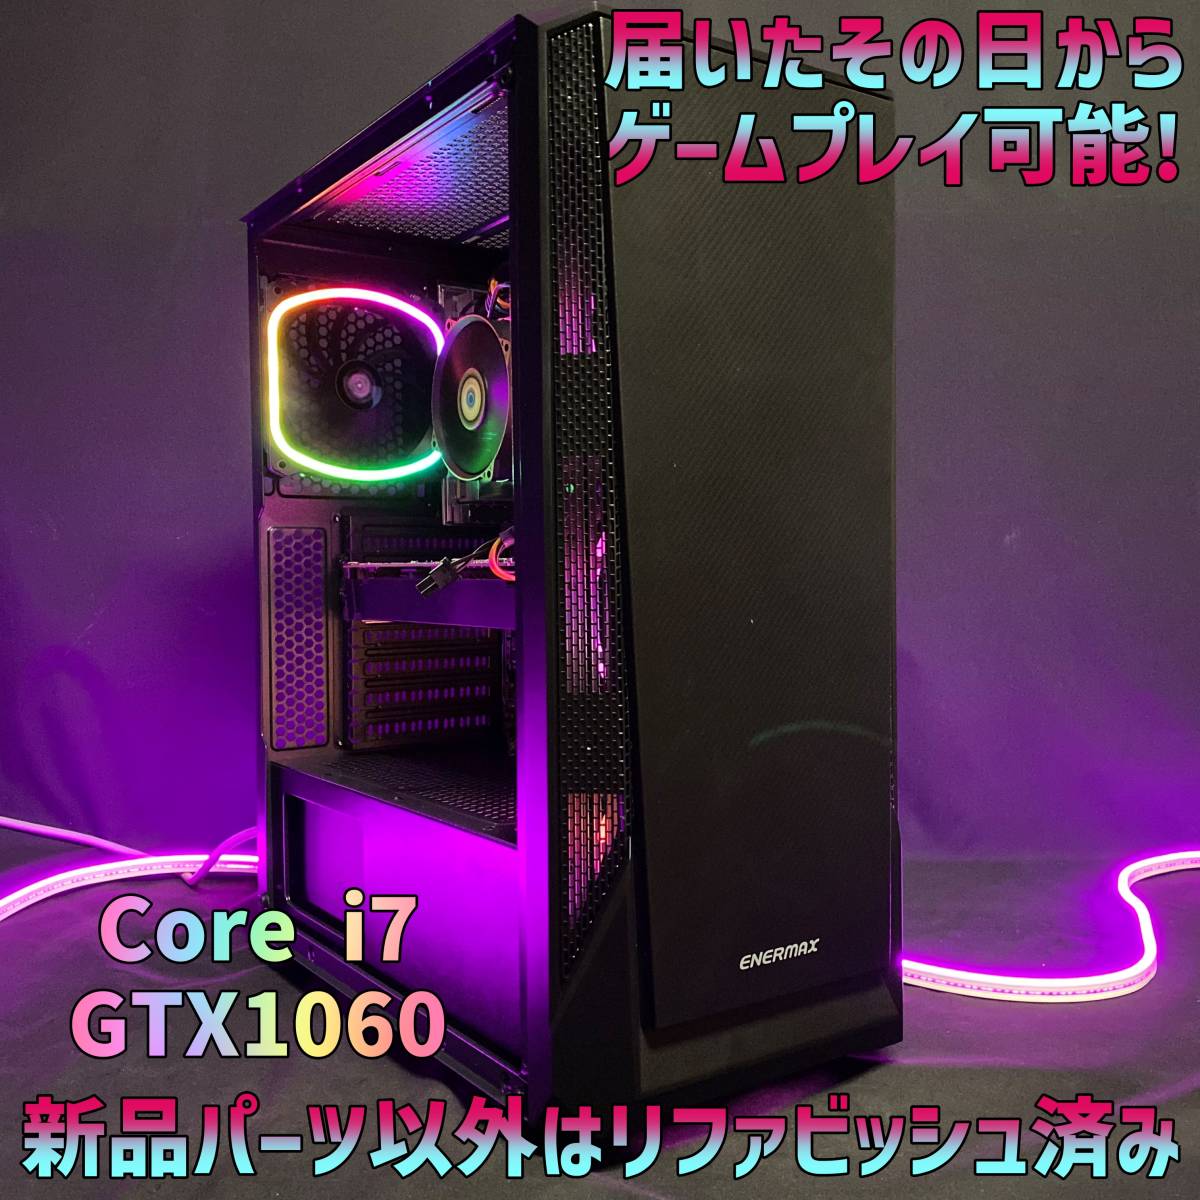 Core i7☆GTX1060☆新品SSD搭載♪ゲーミングPC☆GM-278 altakaful-ins.ps